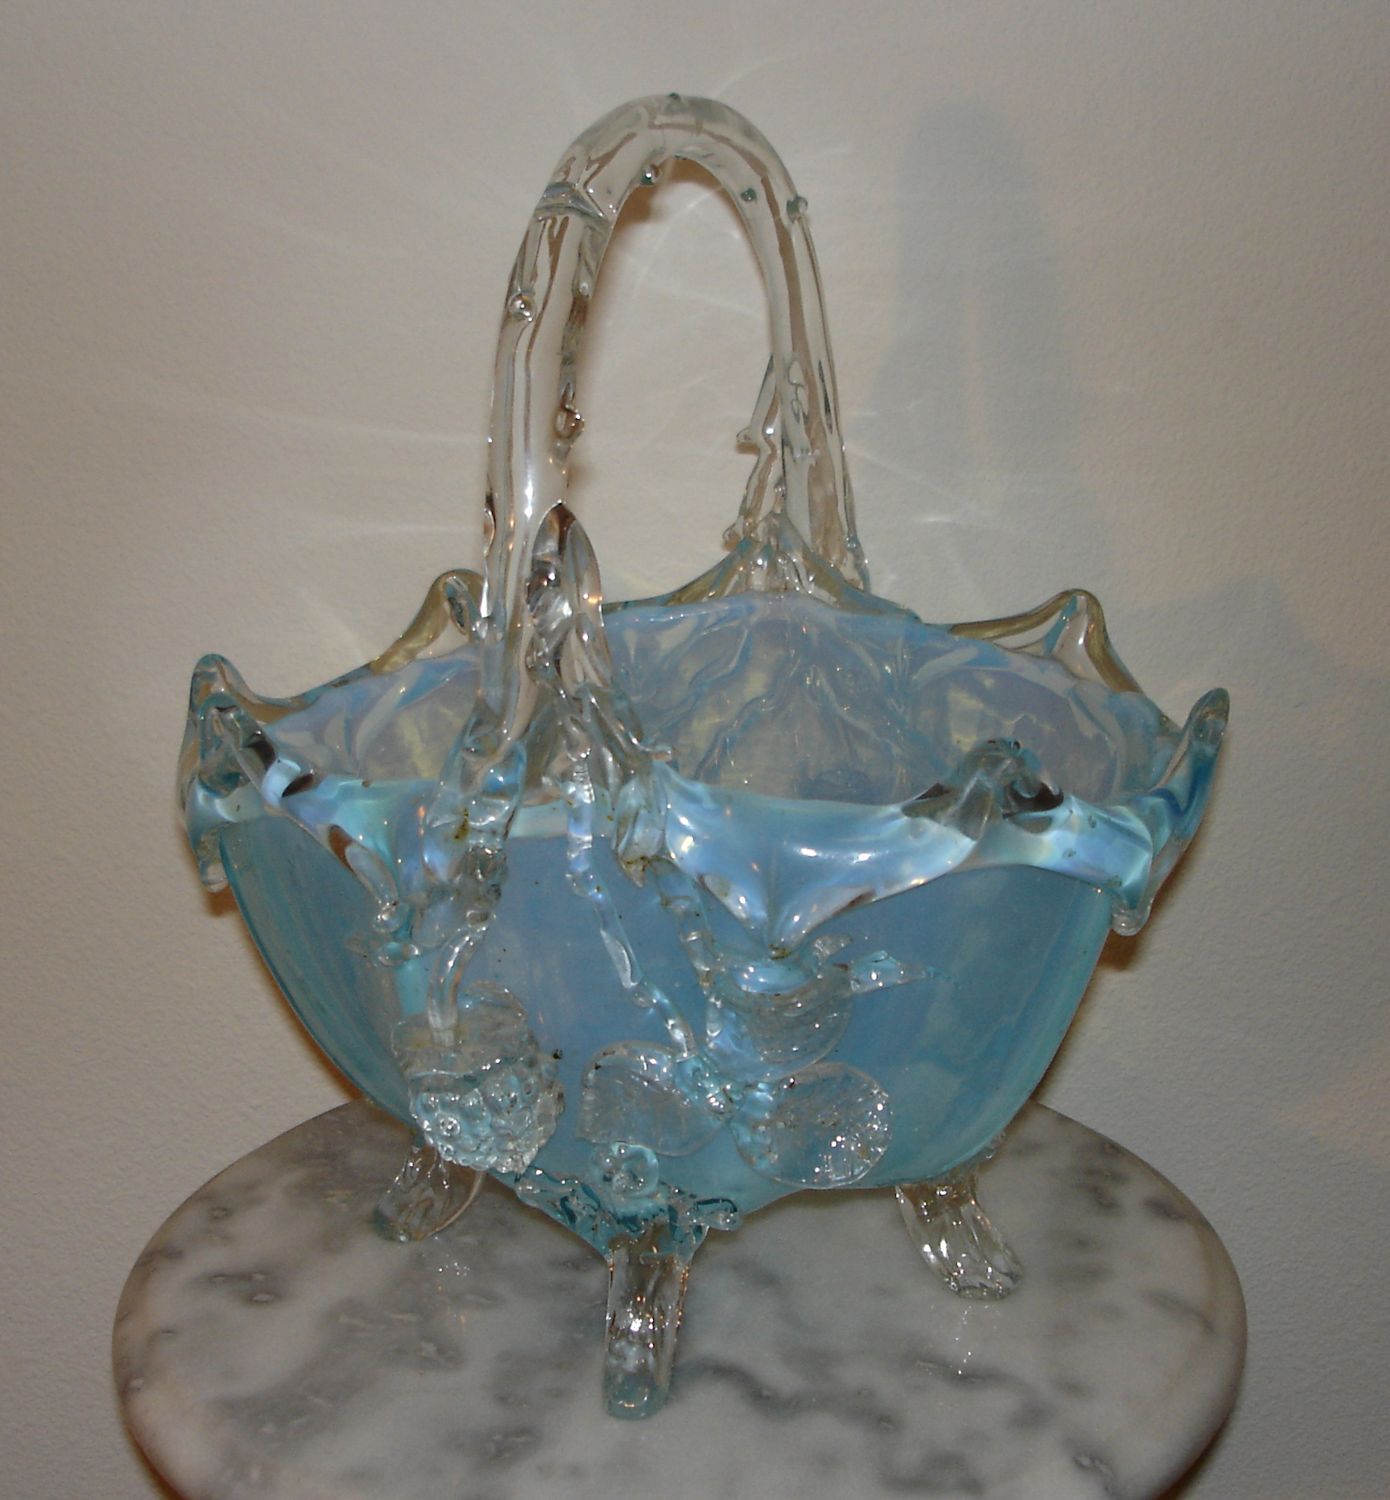 Antique Art Glass Handled Basket